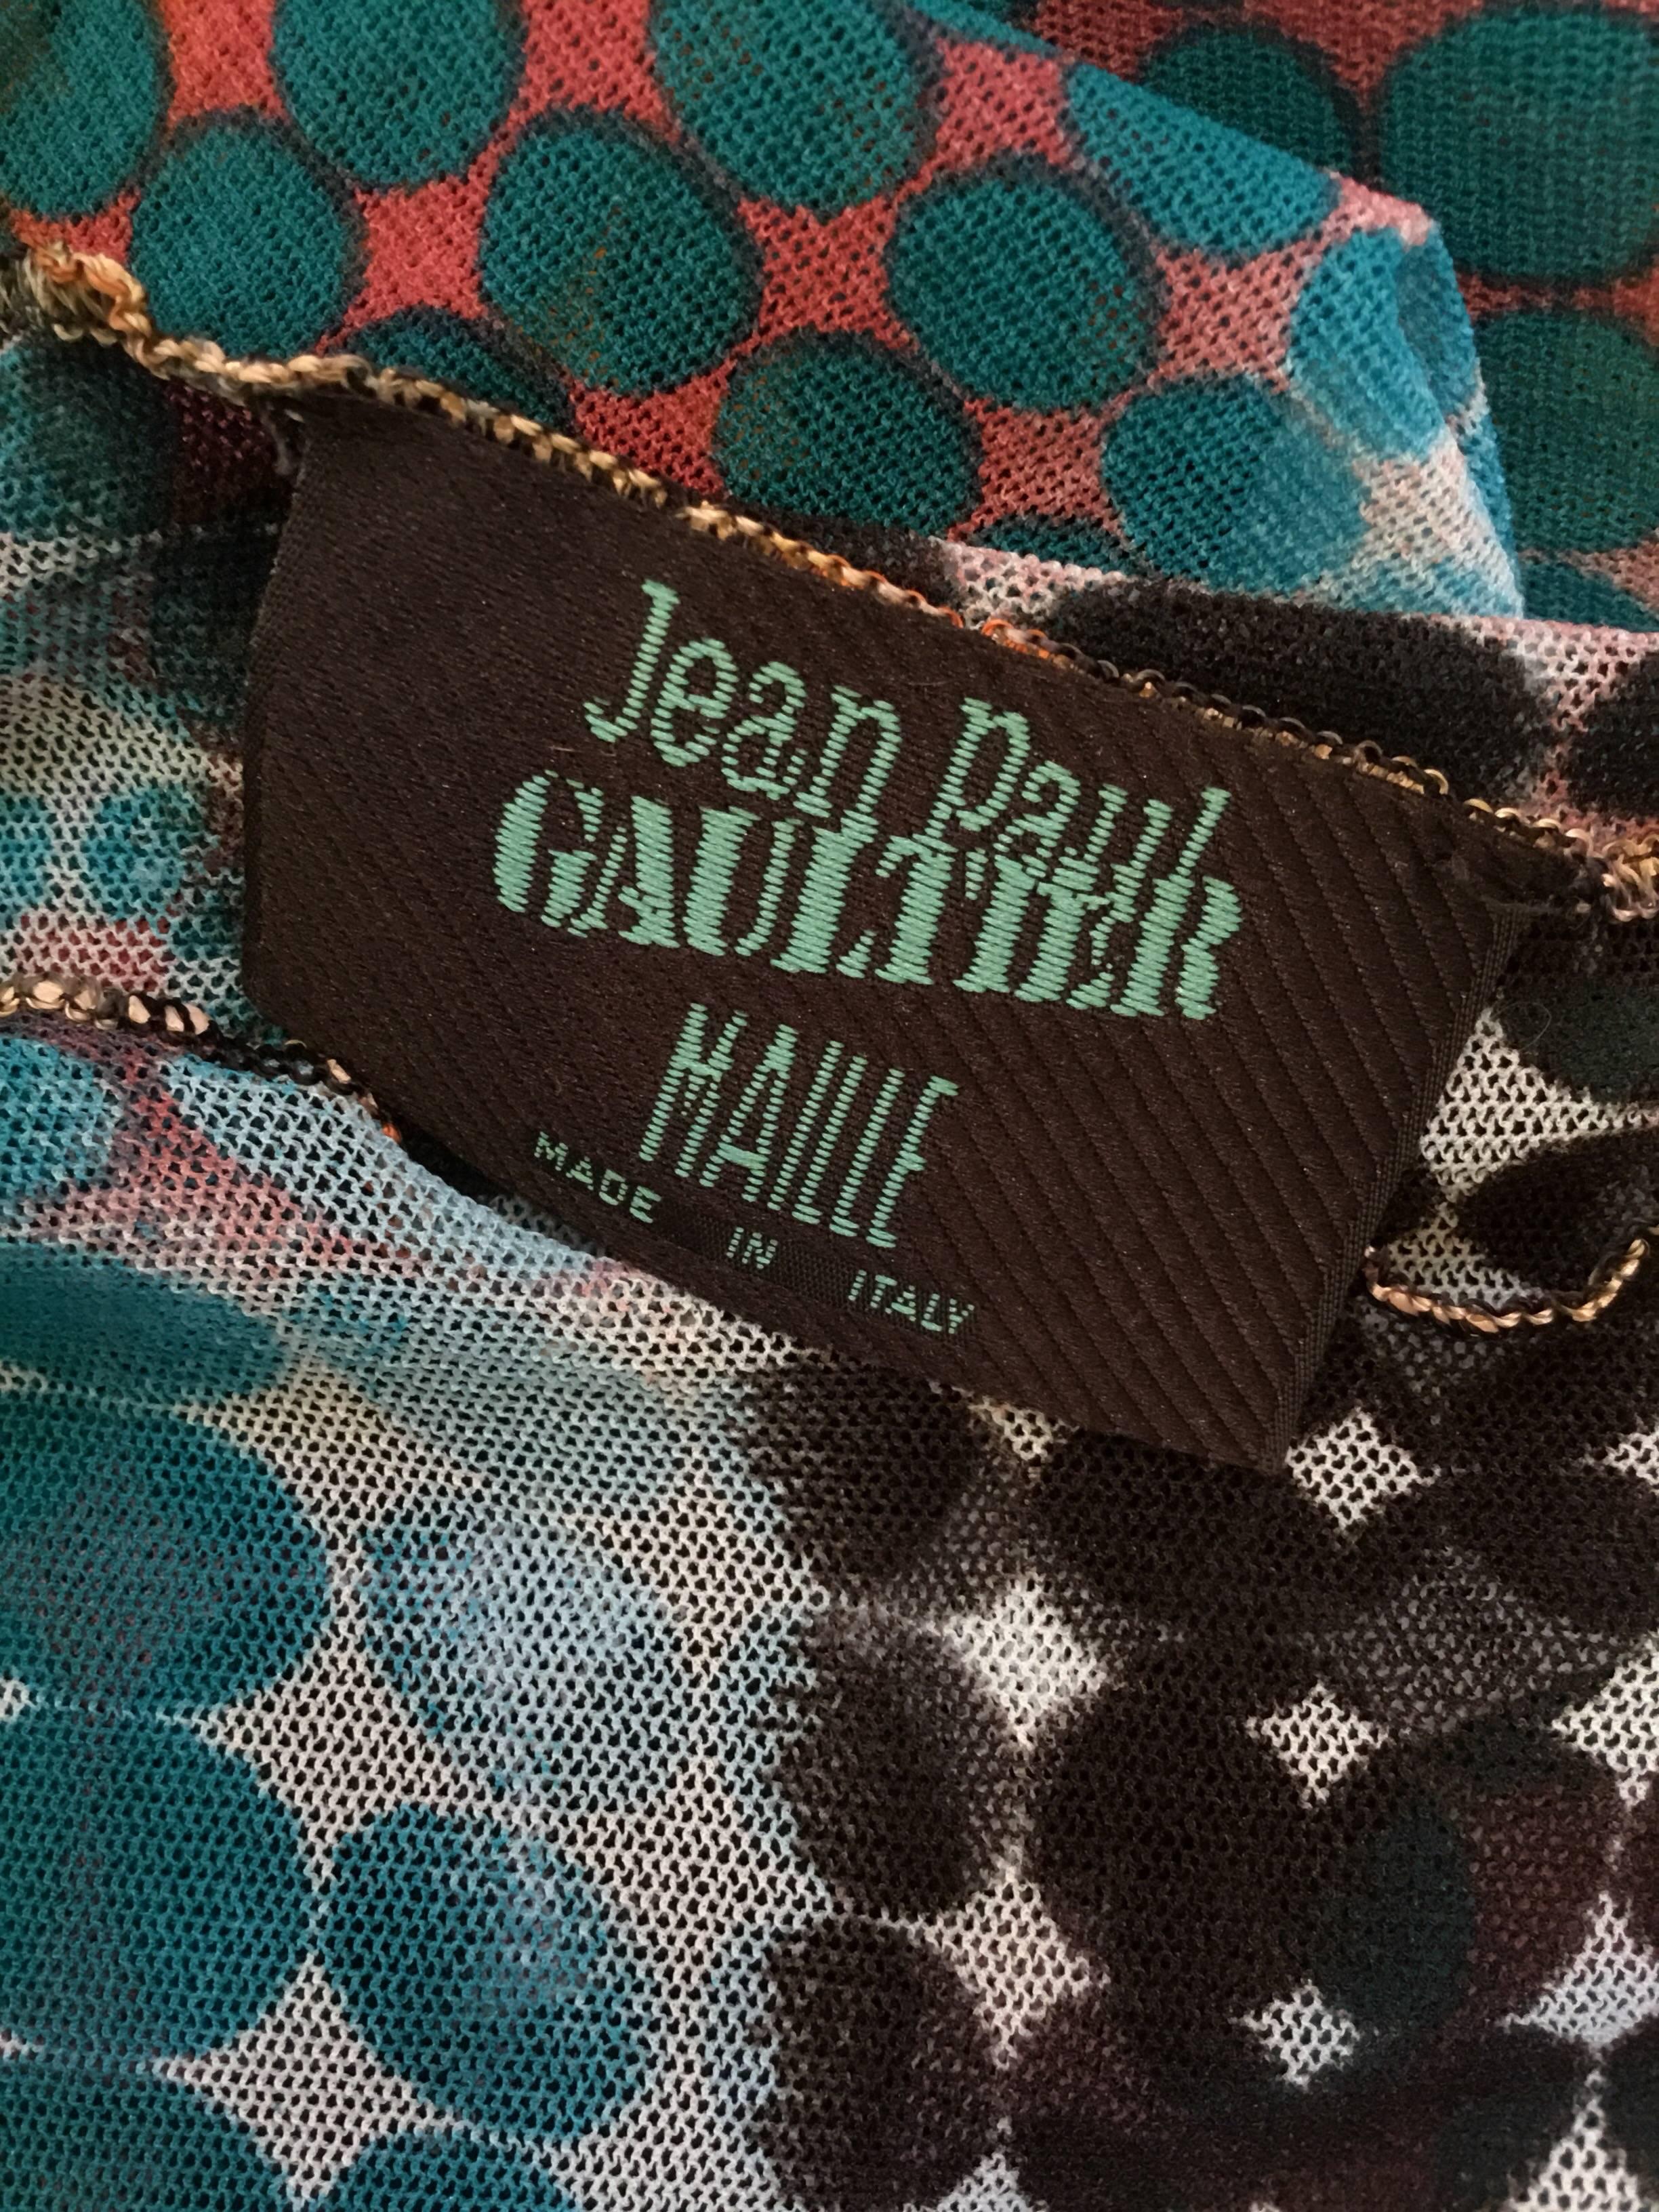 Gray Jean Paul Gaultier Maille Bikini Print Stocking Knit Mesh Top